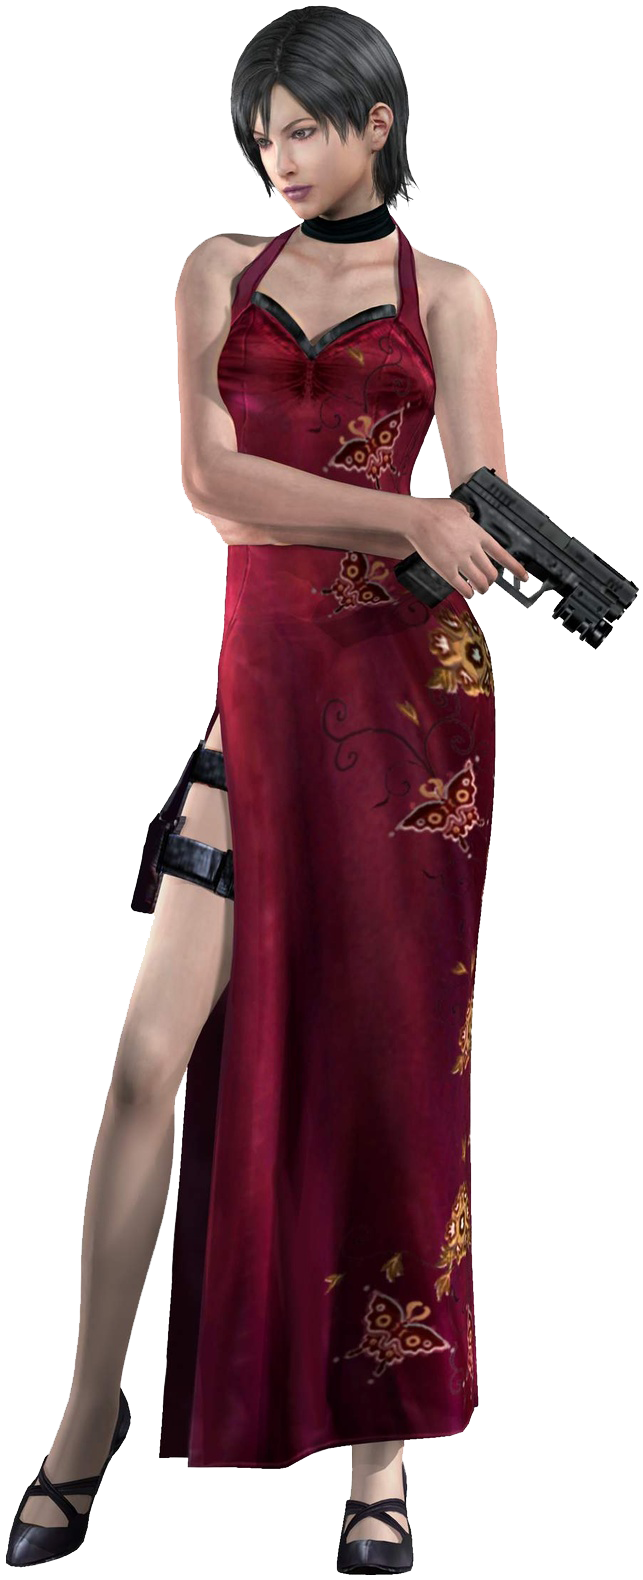 ADA WONG • Resident Evil Lore 